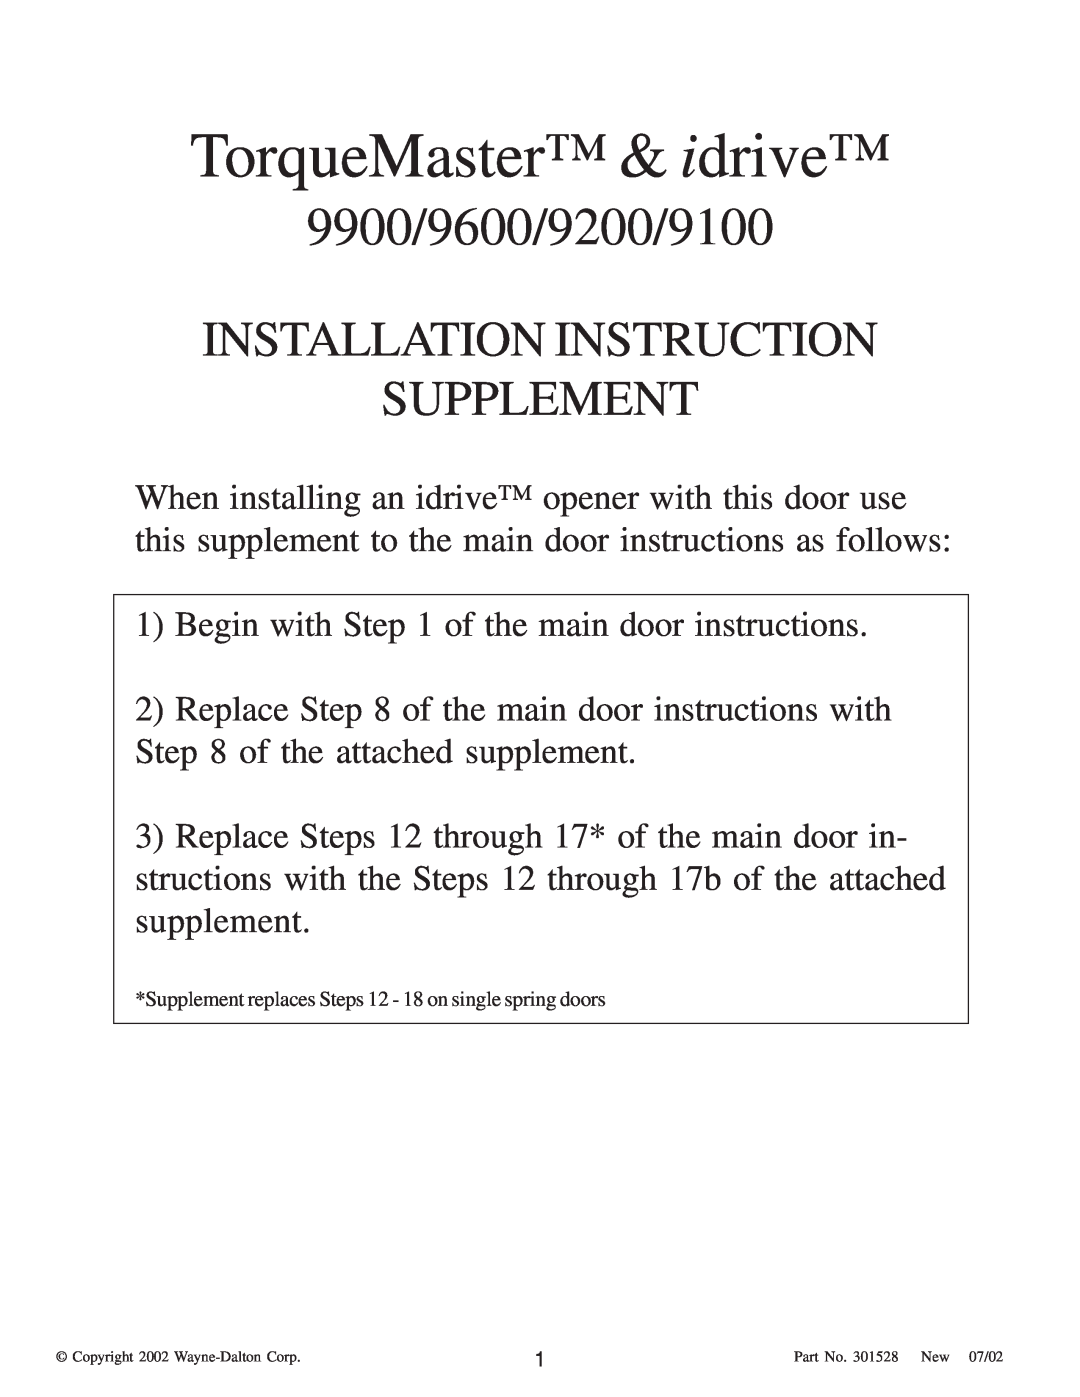 Wayne-Dalton installation instructions 9100/9600/9900, Windload Post, Installation Instructions 